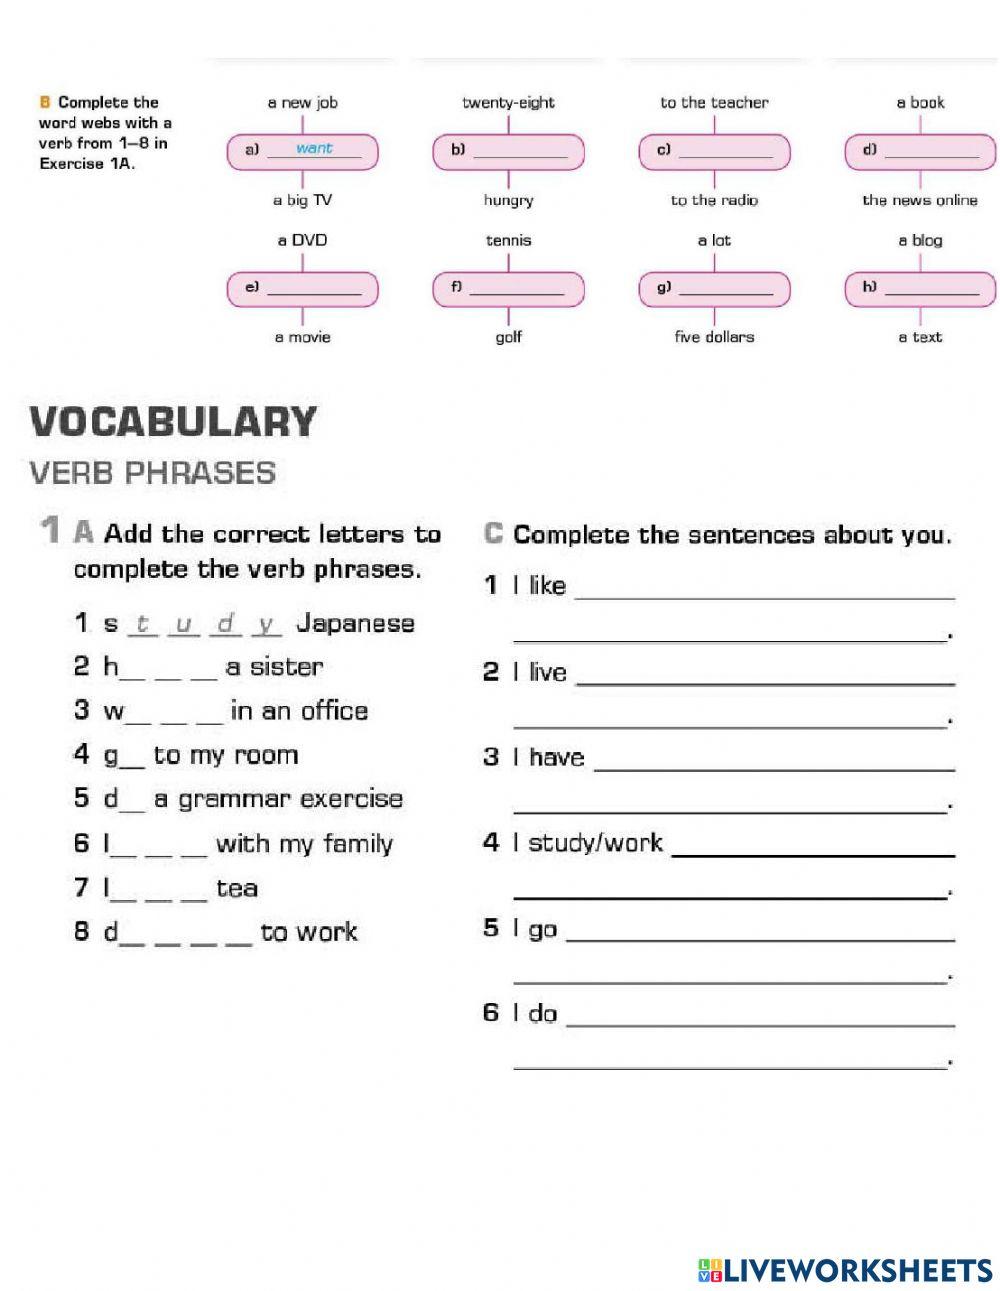 Verb phrases- unit 4 Speak out